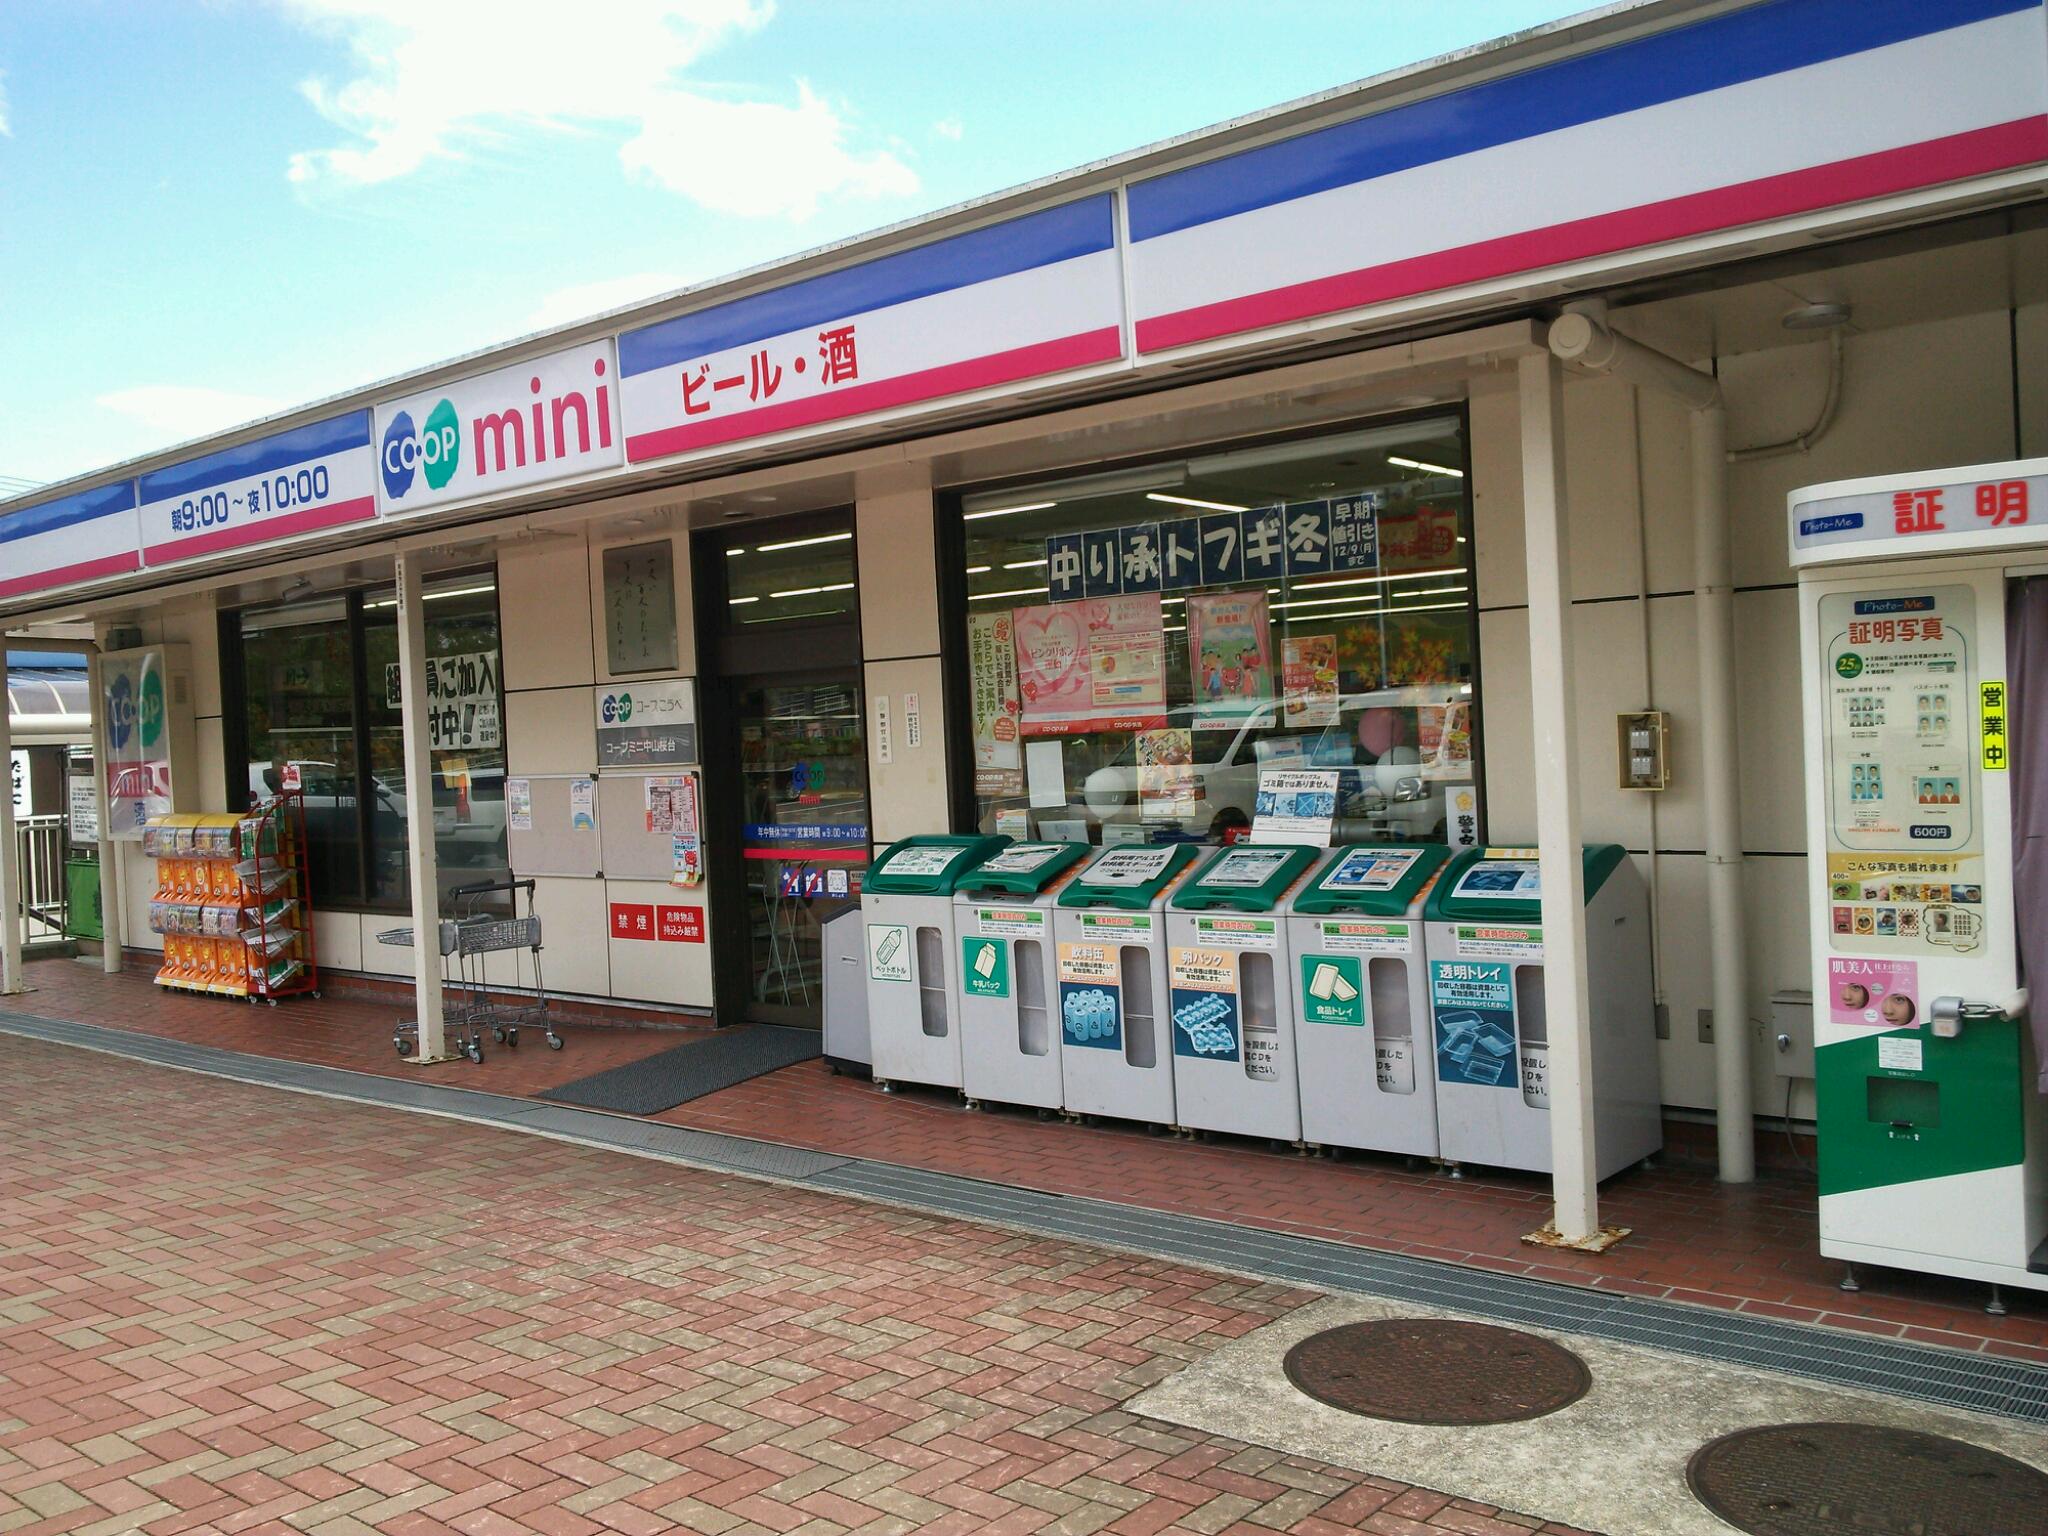 Supermarket. Kopumini Nakayamasakuradai until the (super) 400m